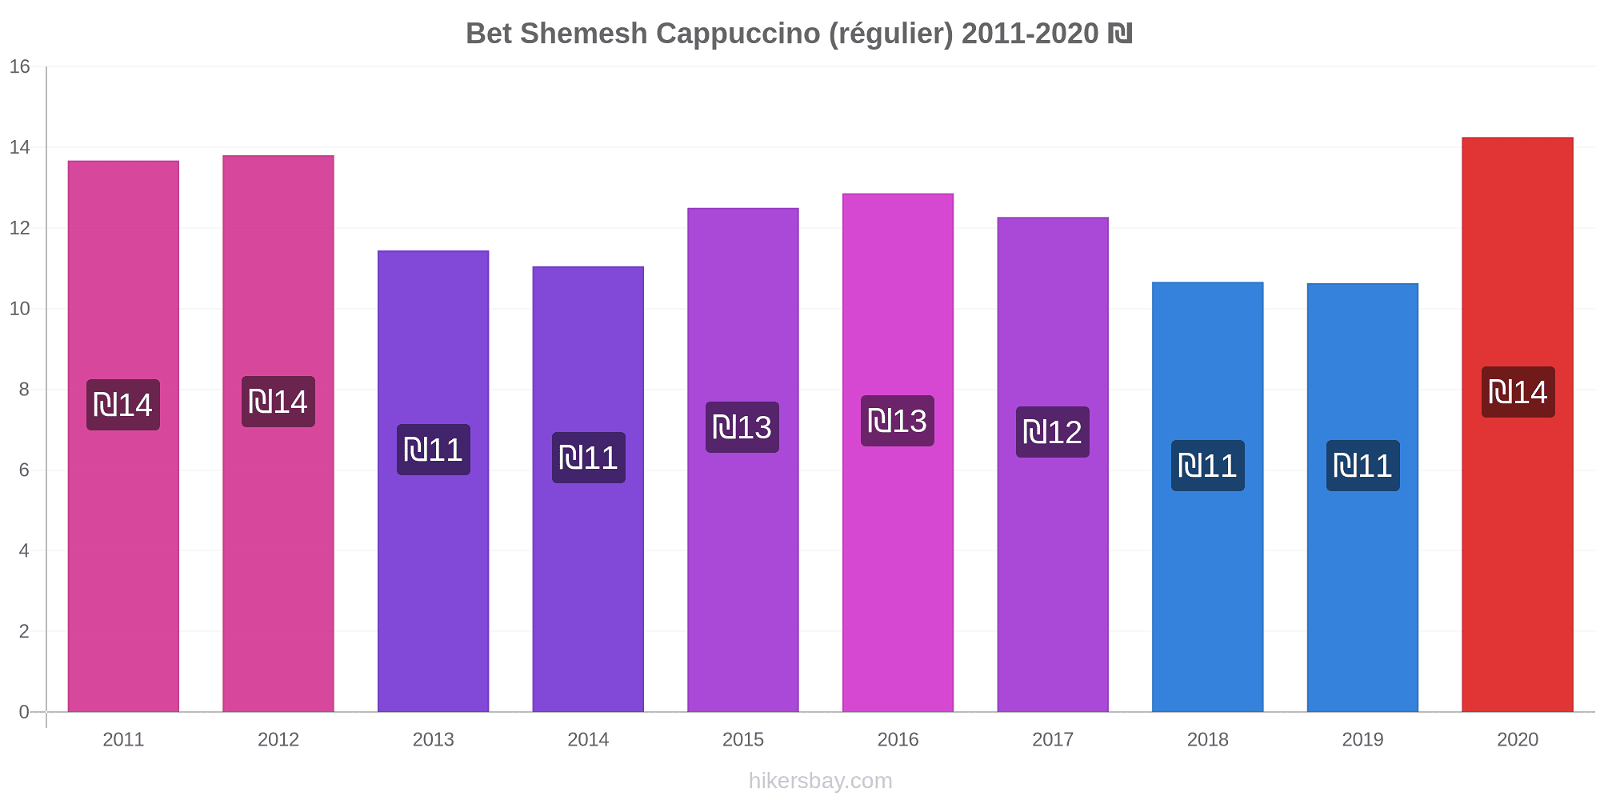 Bet Shemesh changements de prix Cappuccino (régulier) hikersbay.com